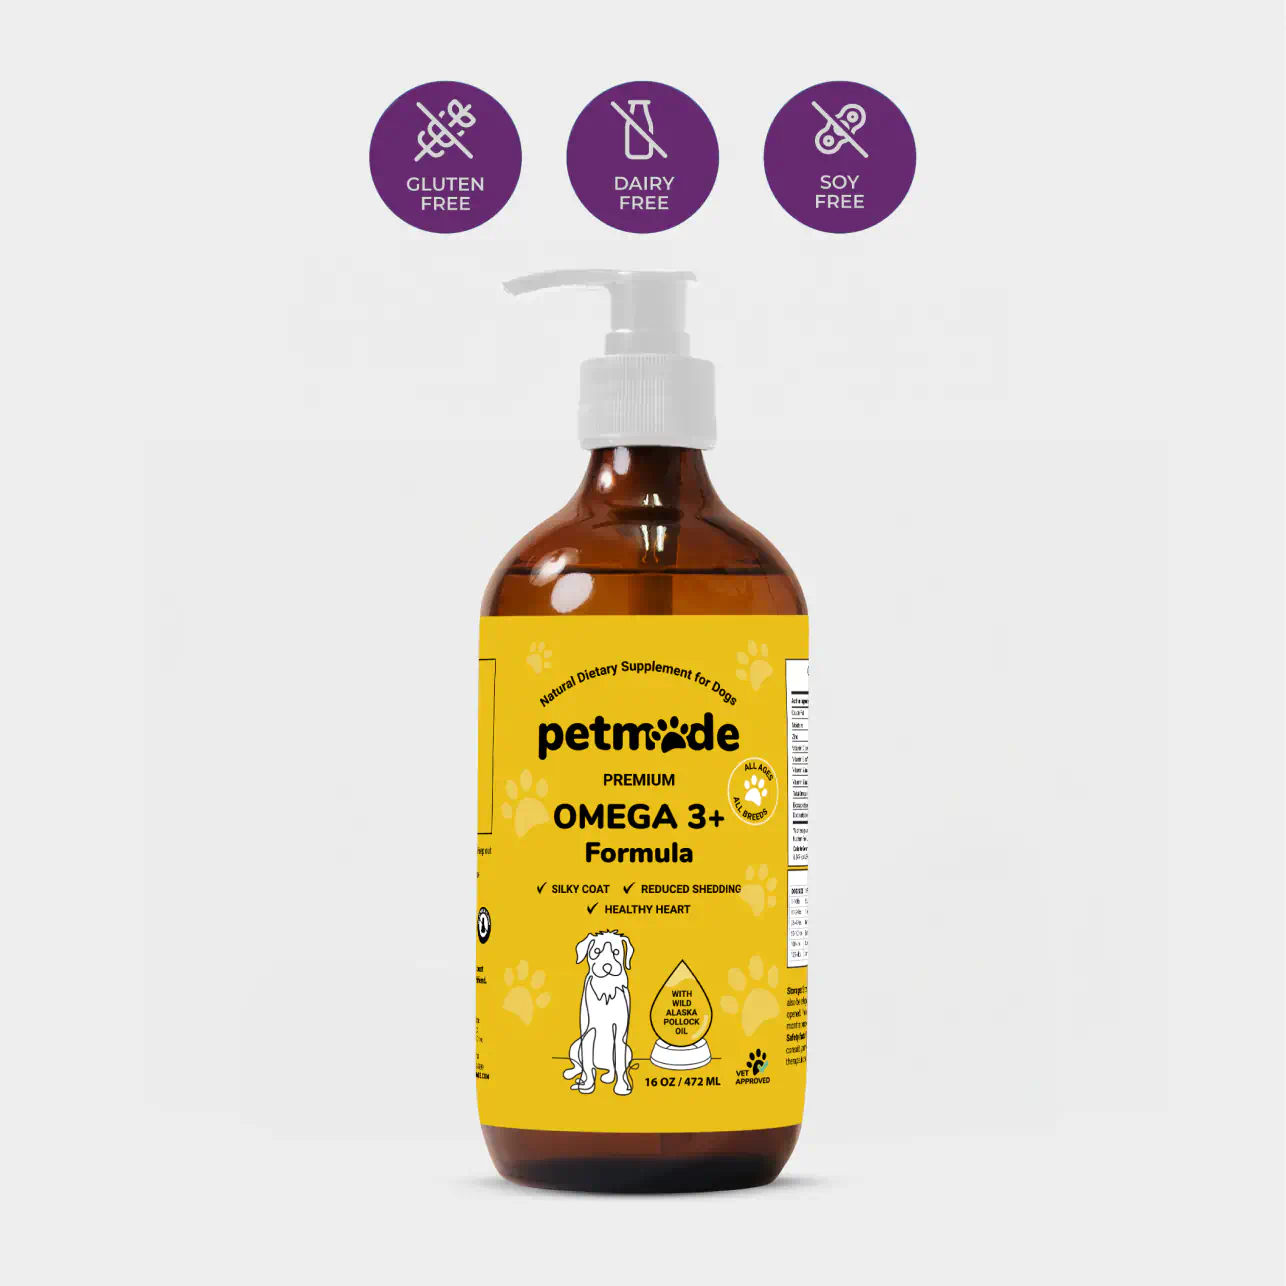 A bottle of PetMade Omega 3+ Formula